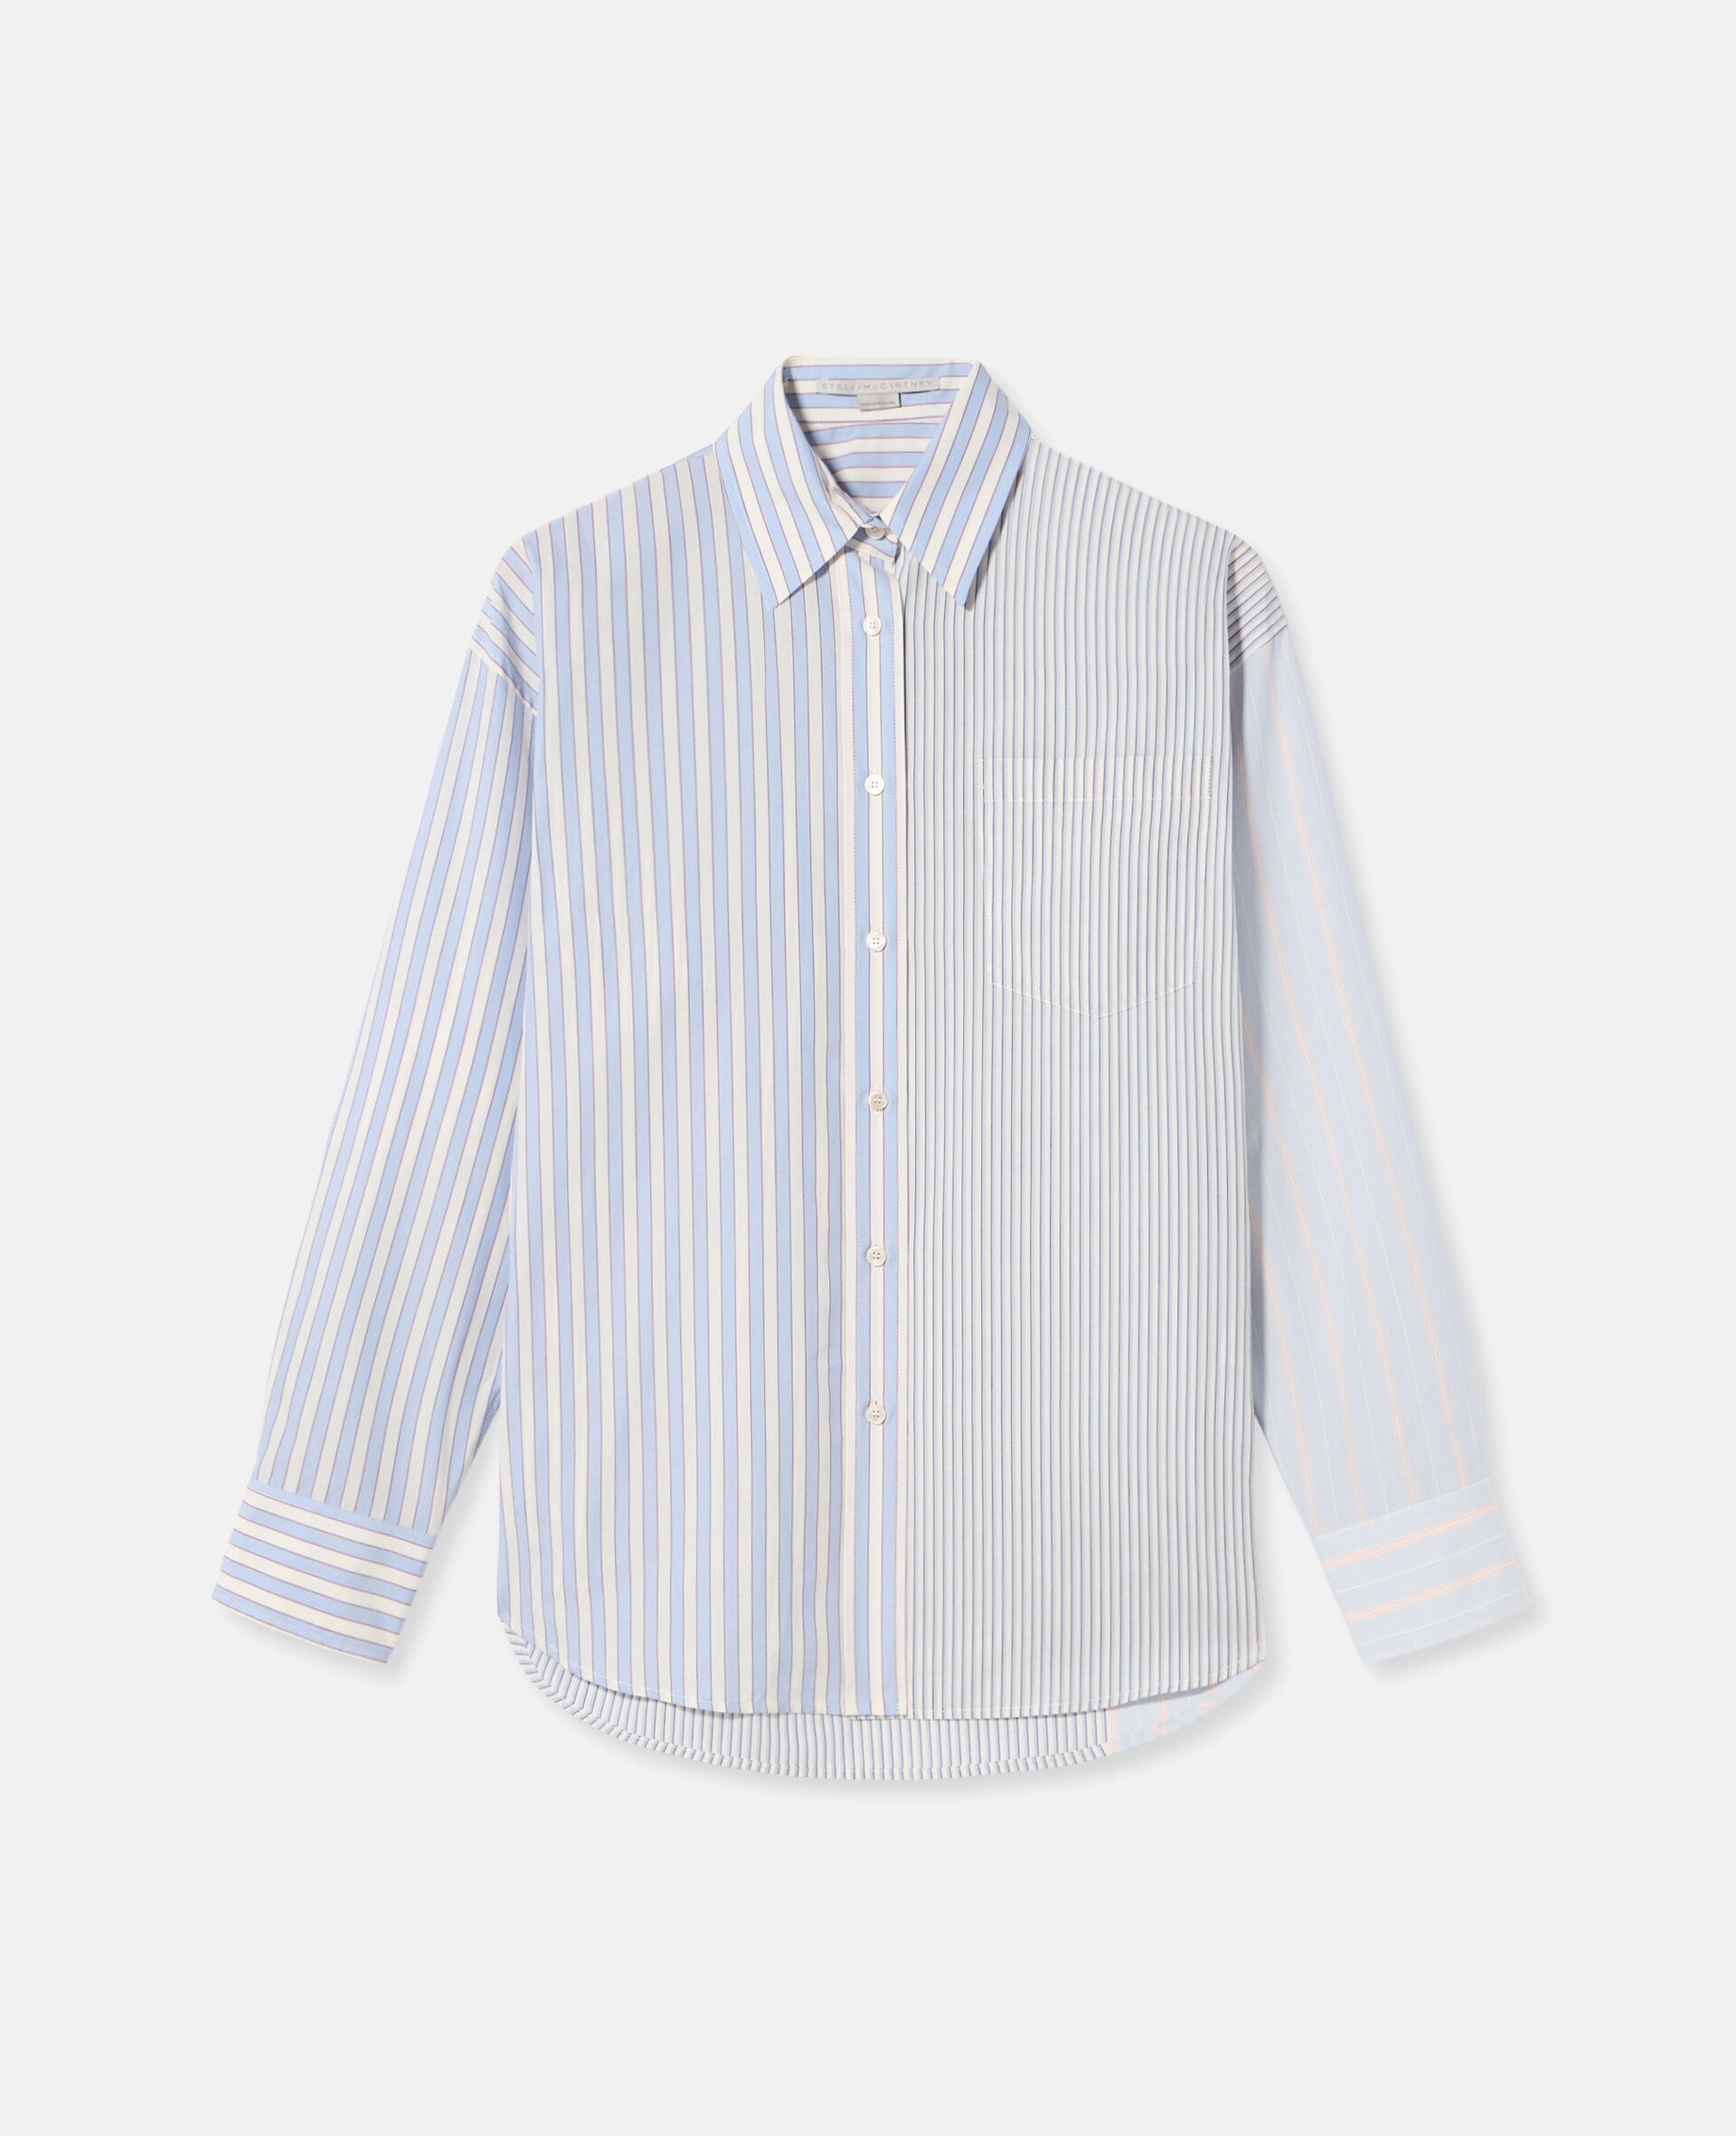 Candy Stripe Boyfriend Shirt-Multicolour-large image number 0